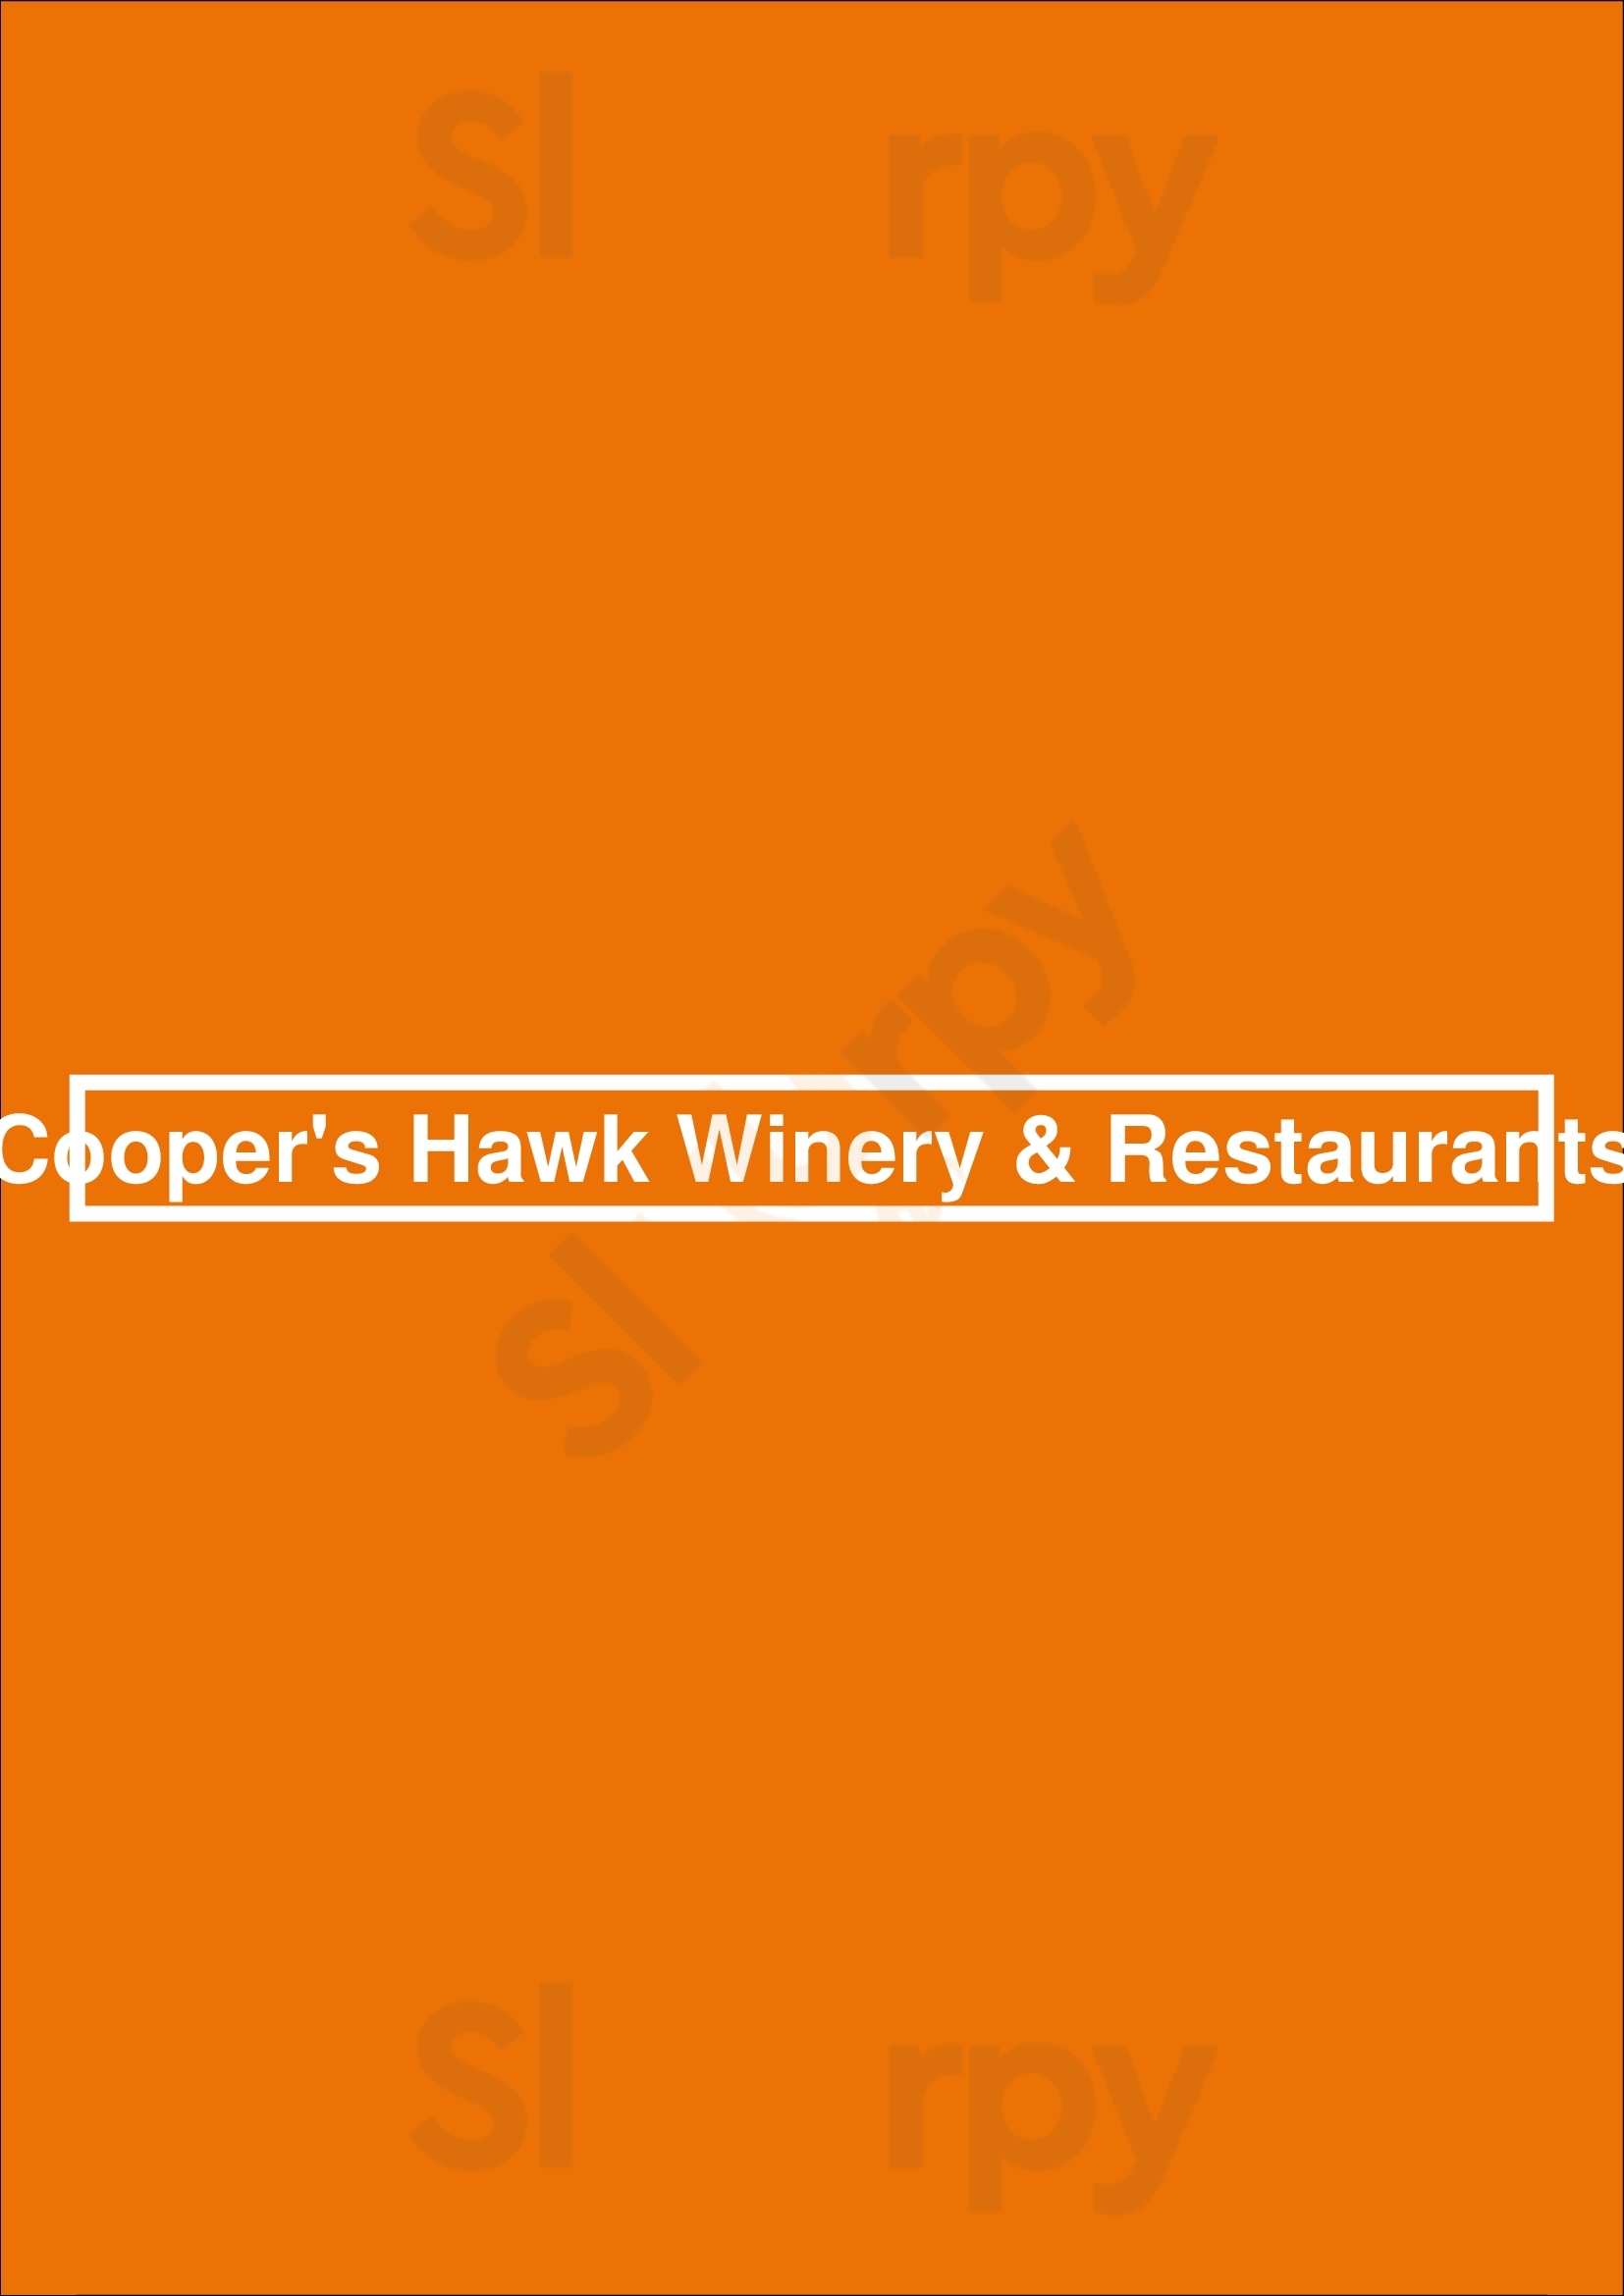 Cooper's Hawk Winery & Restaurant- Indianapolis Indianapolis Menu - 1